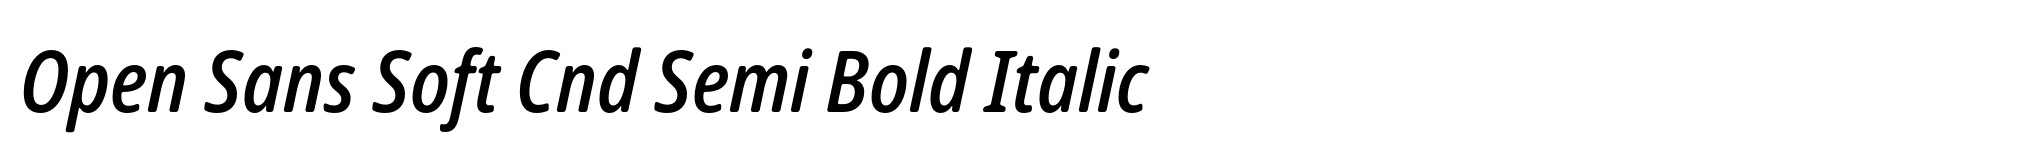 Open Sans Soft Cnd Semi Bold Italic image